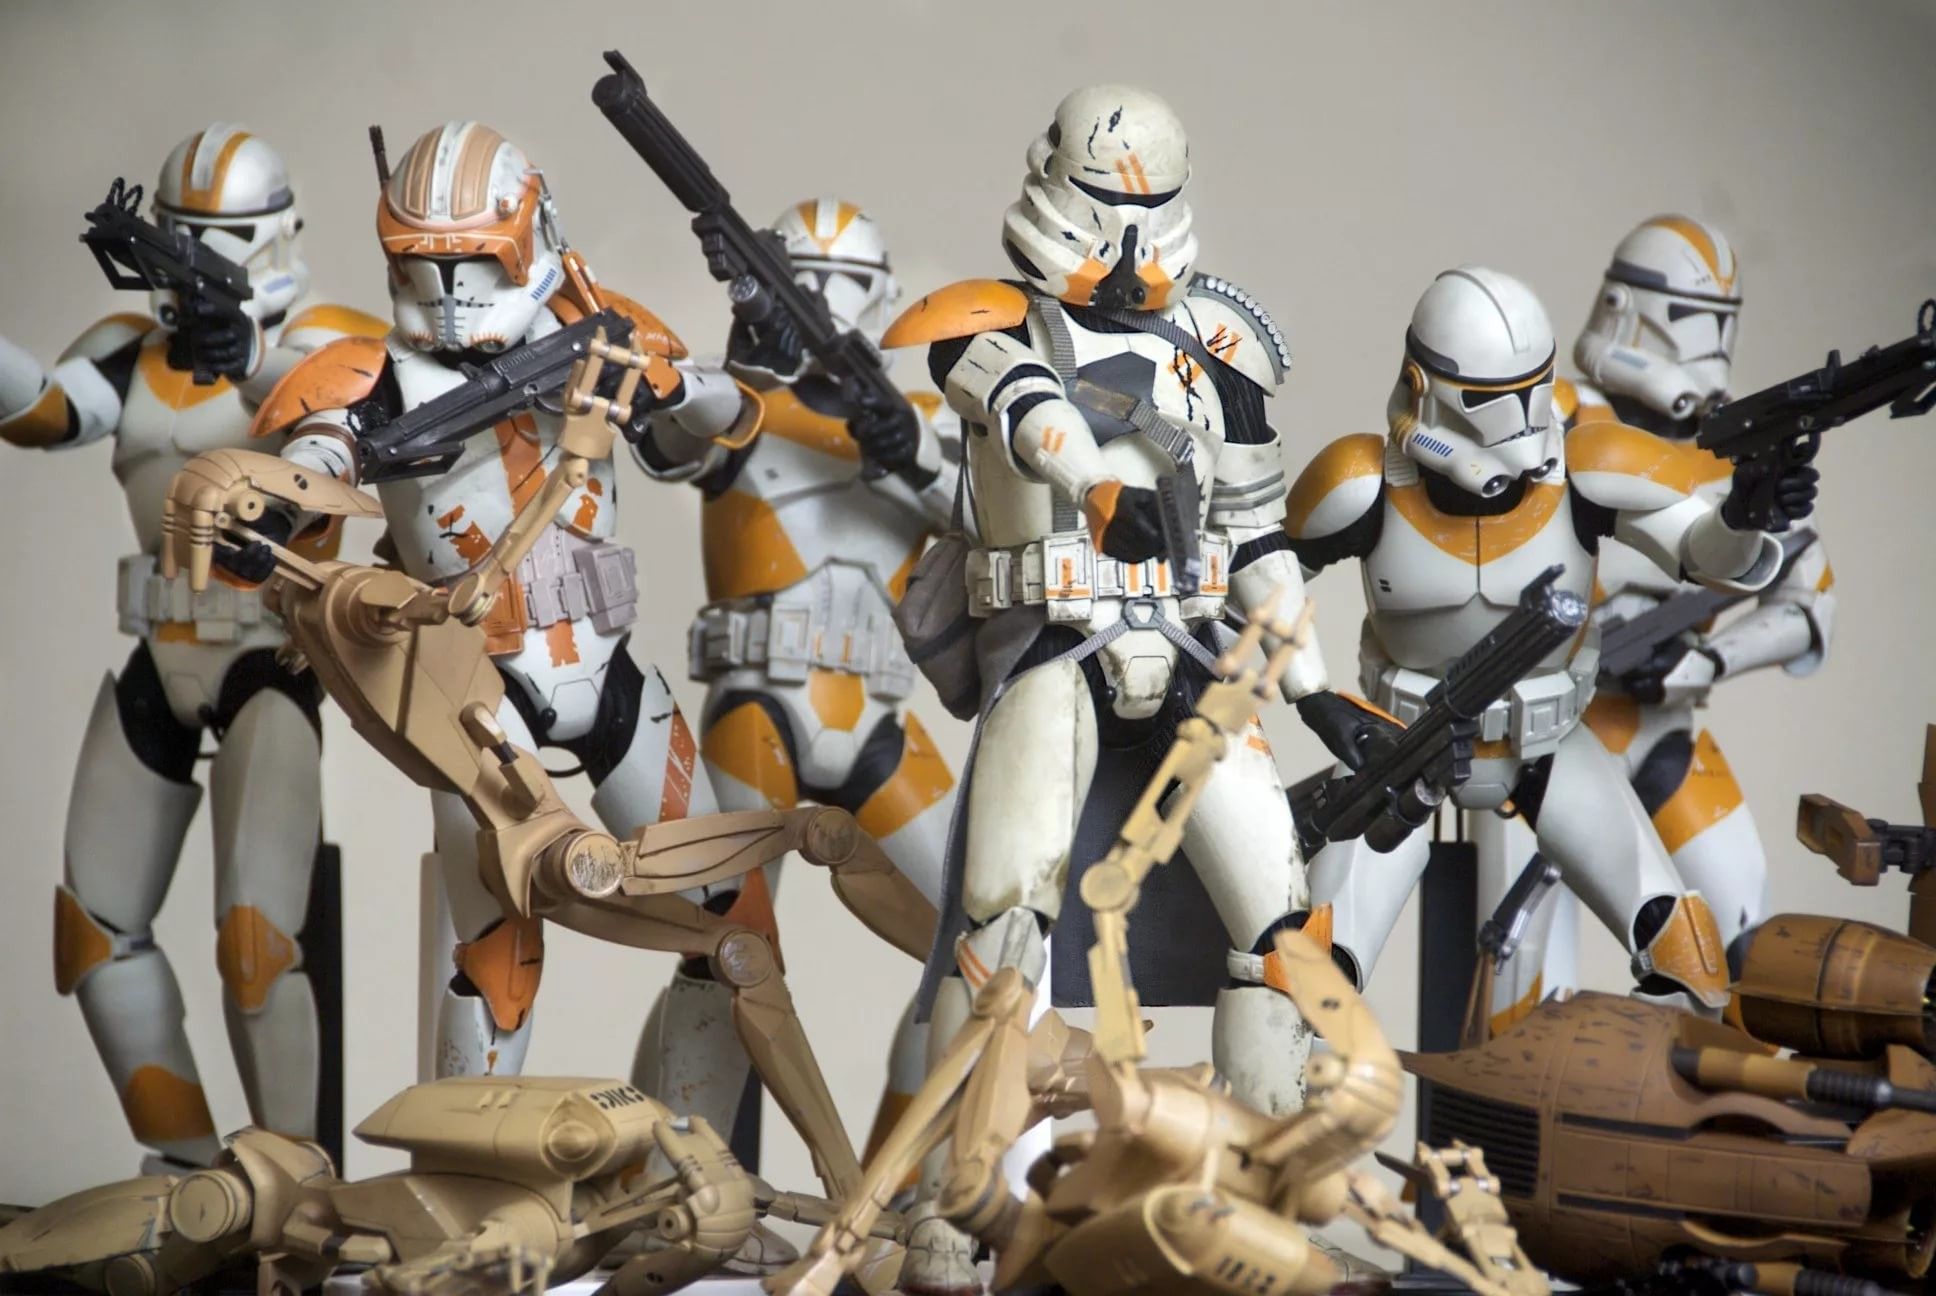 clone trooper phase 3 wallpaper hd